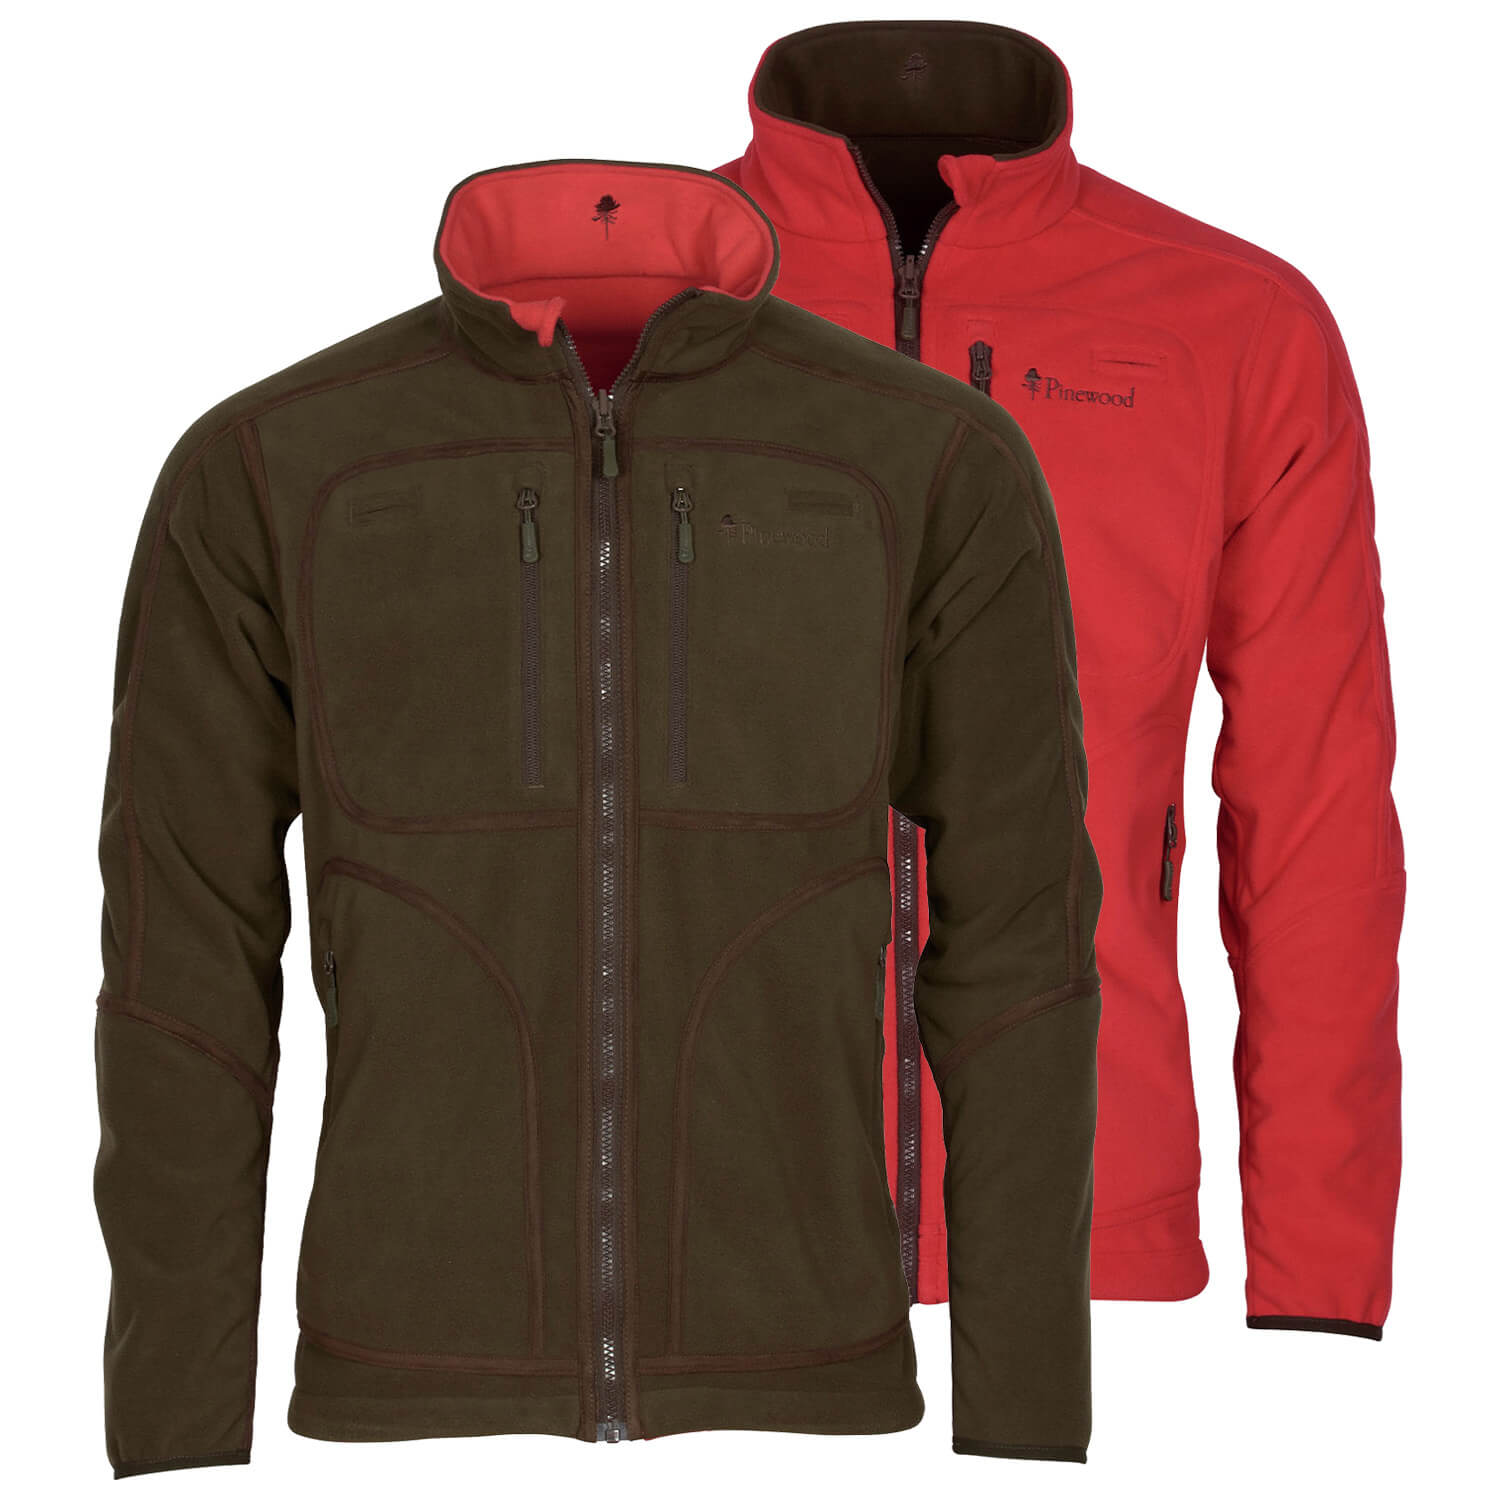 Pinewood reversible jacket Furudal (red/brown) - Driven Hunt